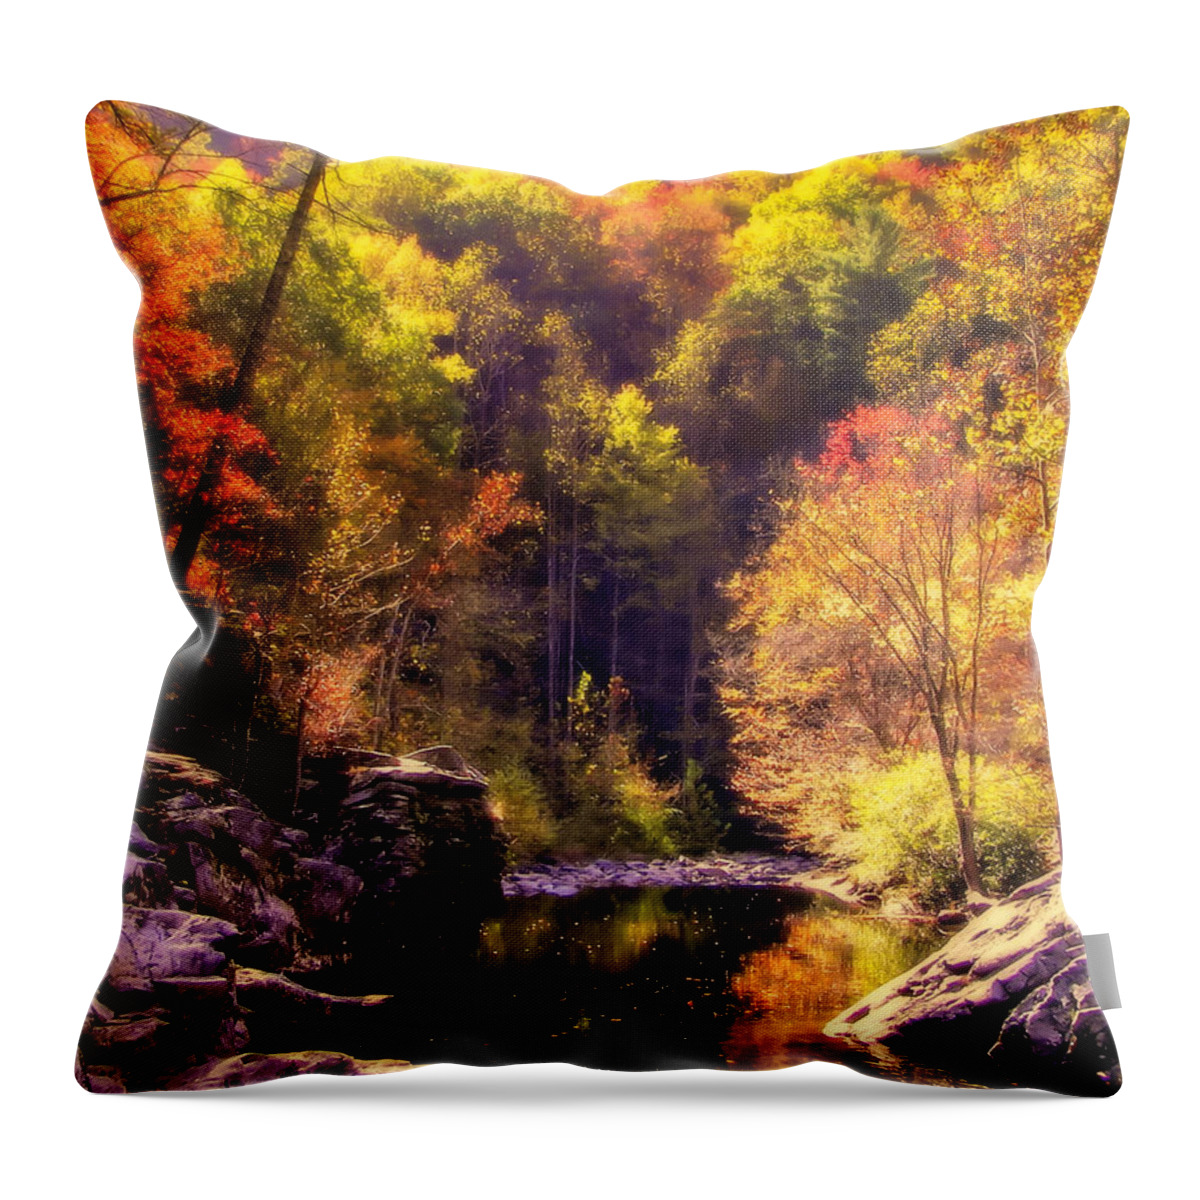 Mountain Streams Throw Pillow featuring the photograph Calling Me Home by Karen Wiles